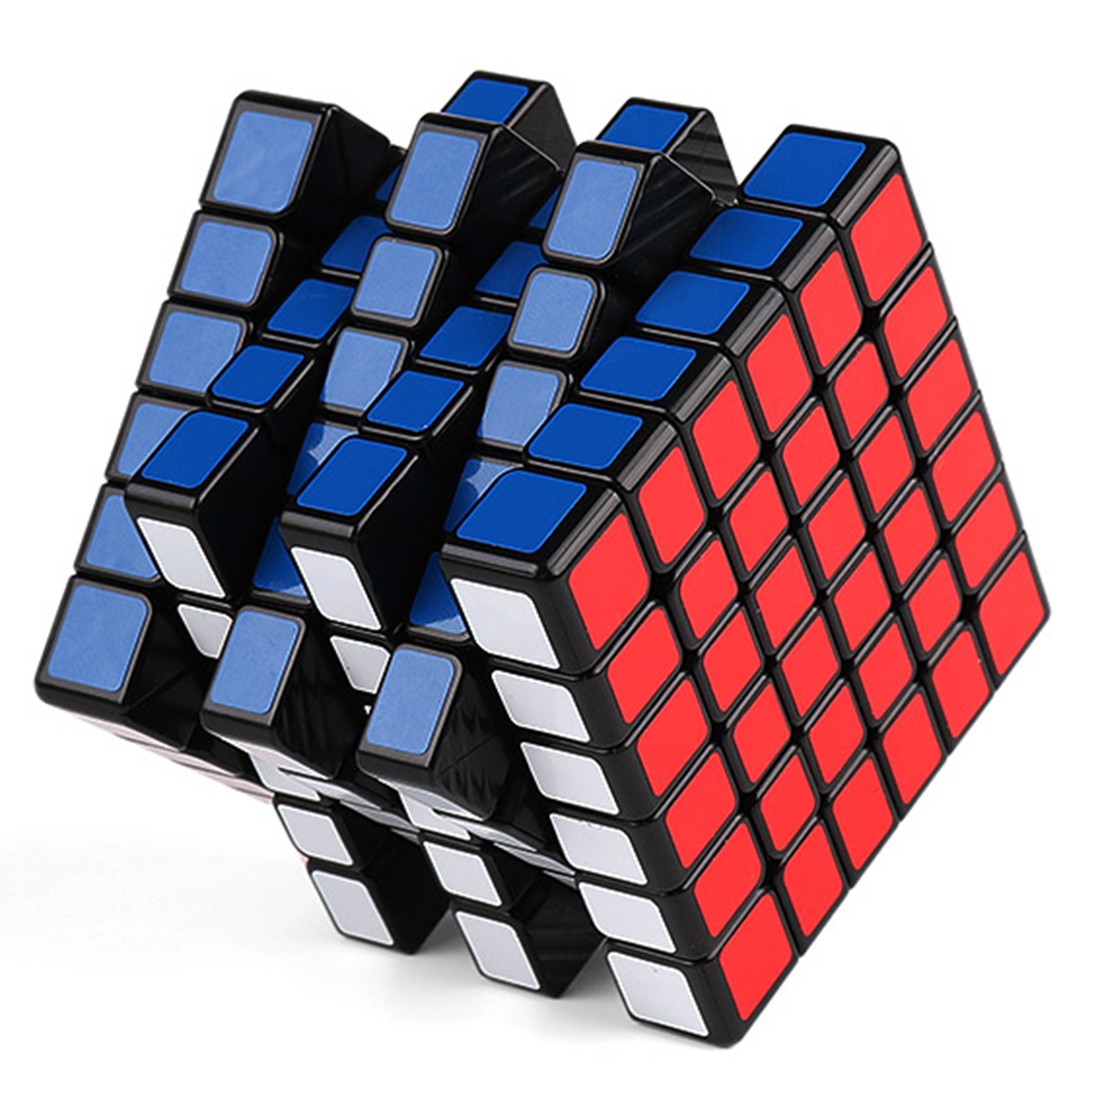 Moyu Aoshi GTS 6x6 cubo mgico cubo de la velocidad Puzzle juguete educativo para nios Brain Traini